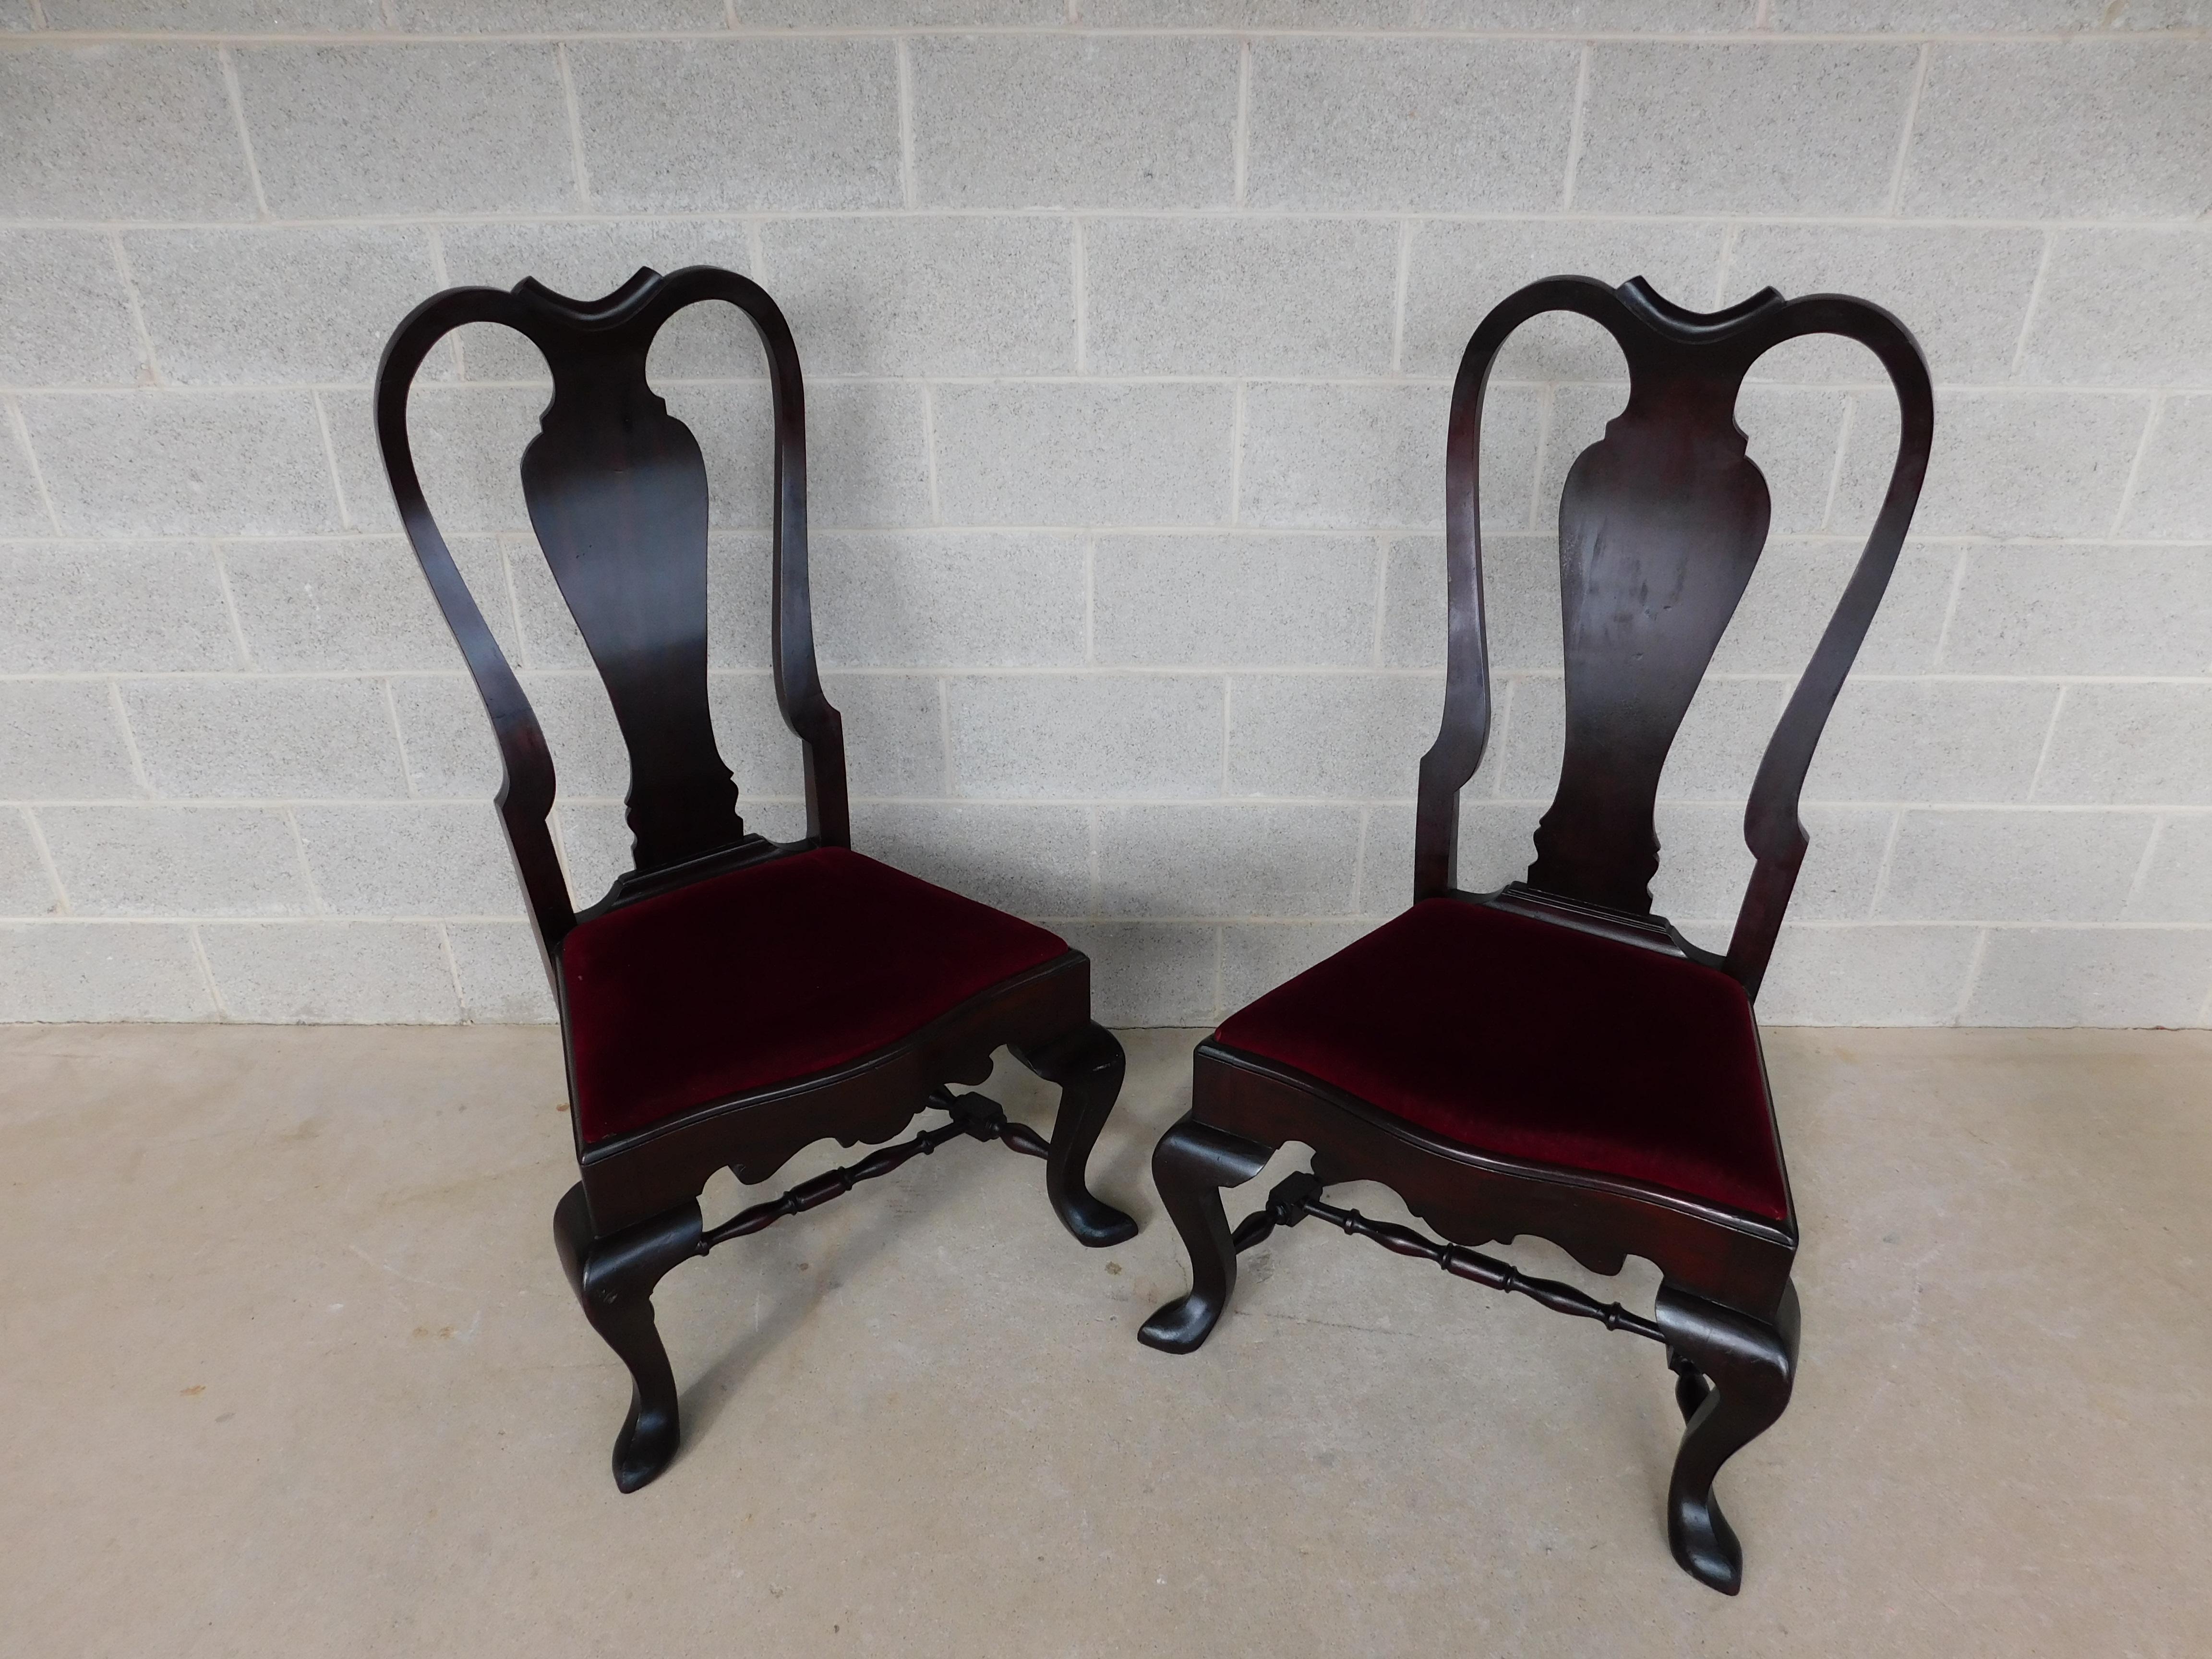 Feldenkreis Mahagoni Queen Anne Stil Oversize Accent Fireside Chairs - ein Paar im Angebot 14